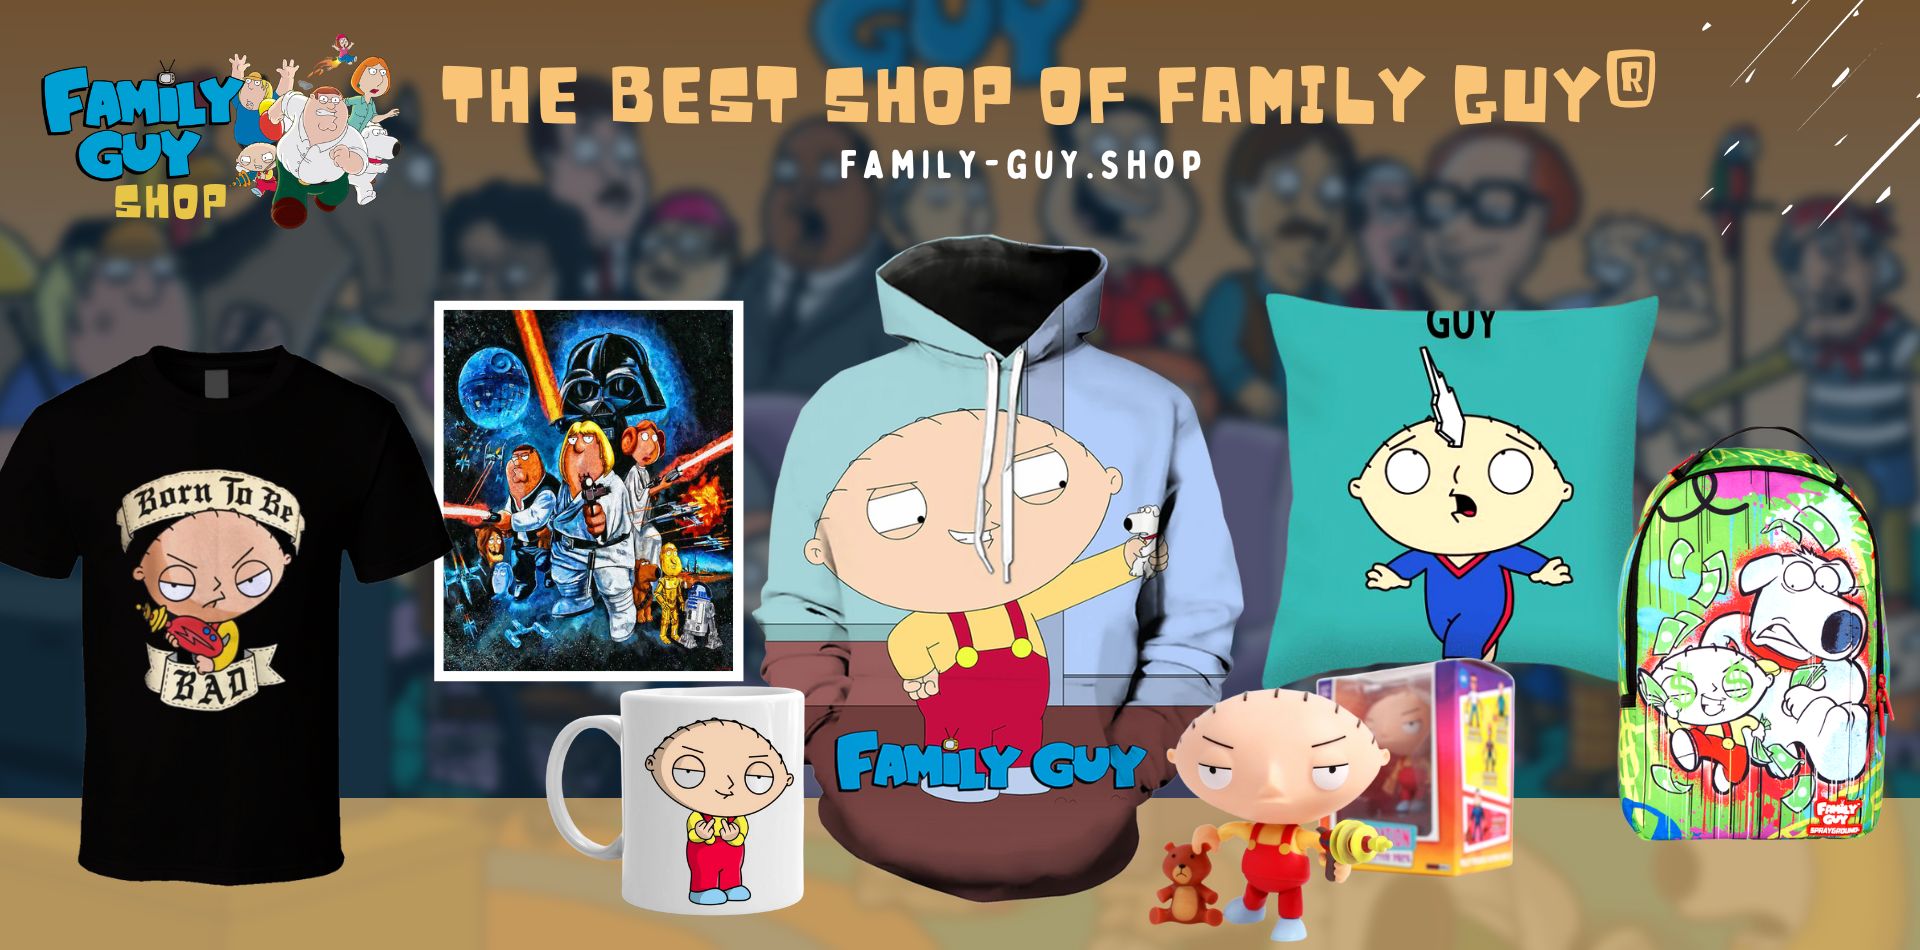 Family Guy Shop Web Banner - Family Guy Shop